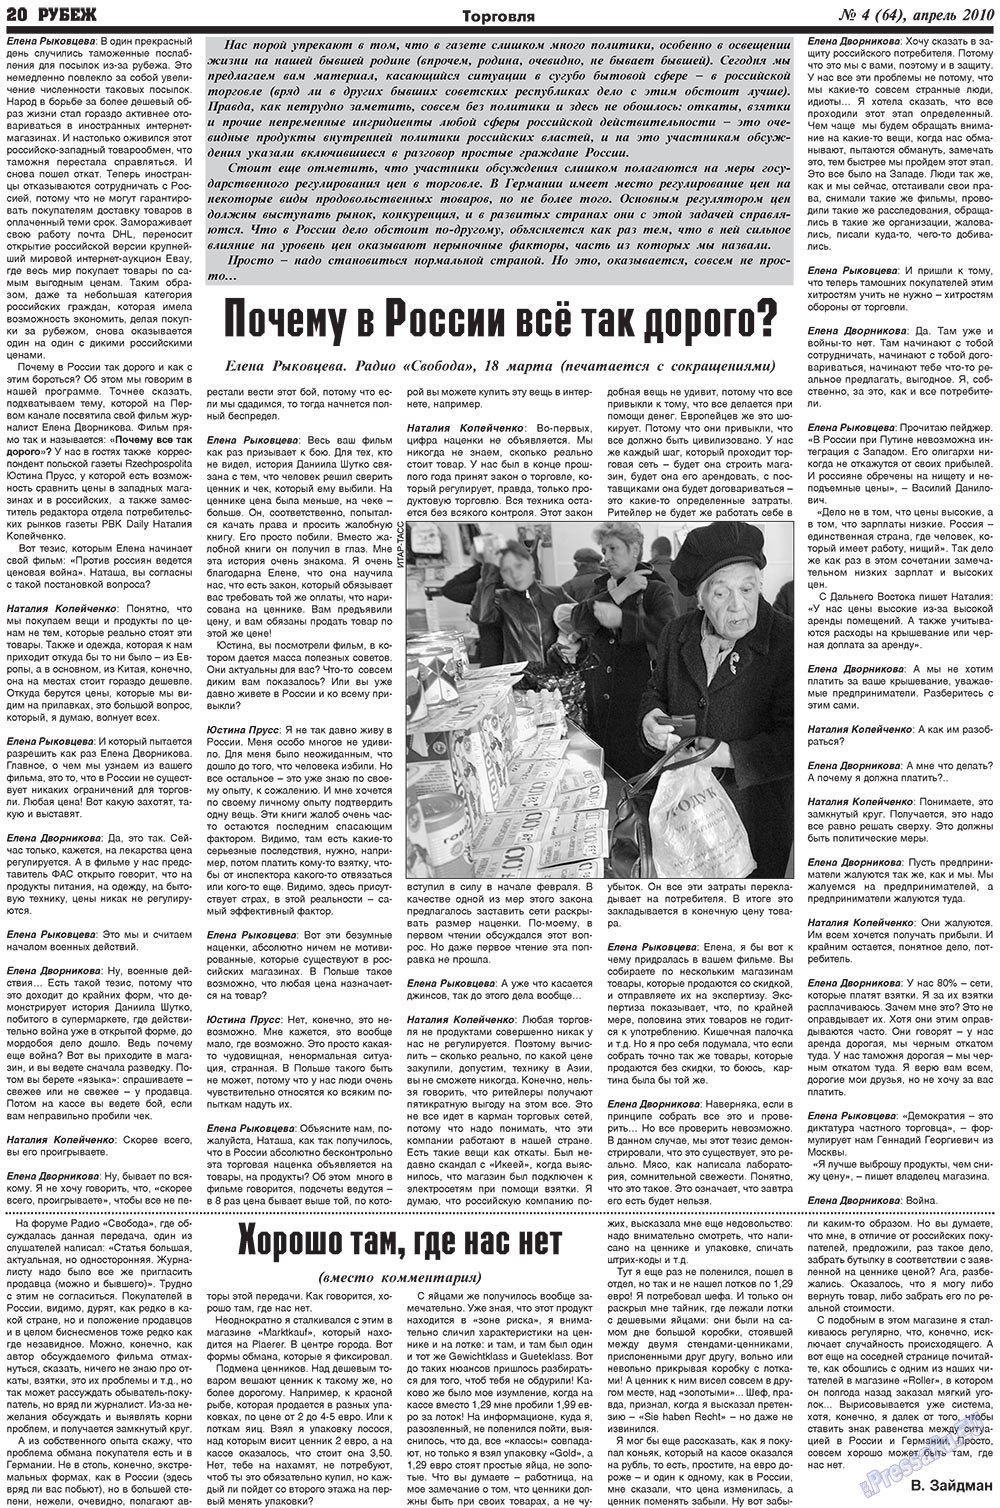 Рубеж, газета. 2010 №4 стр.20